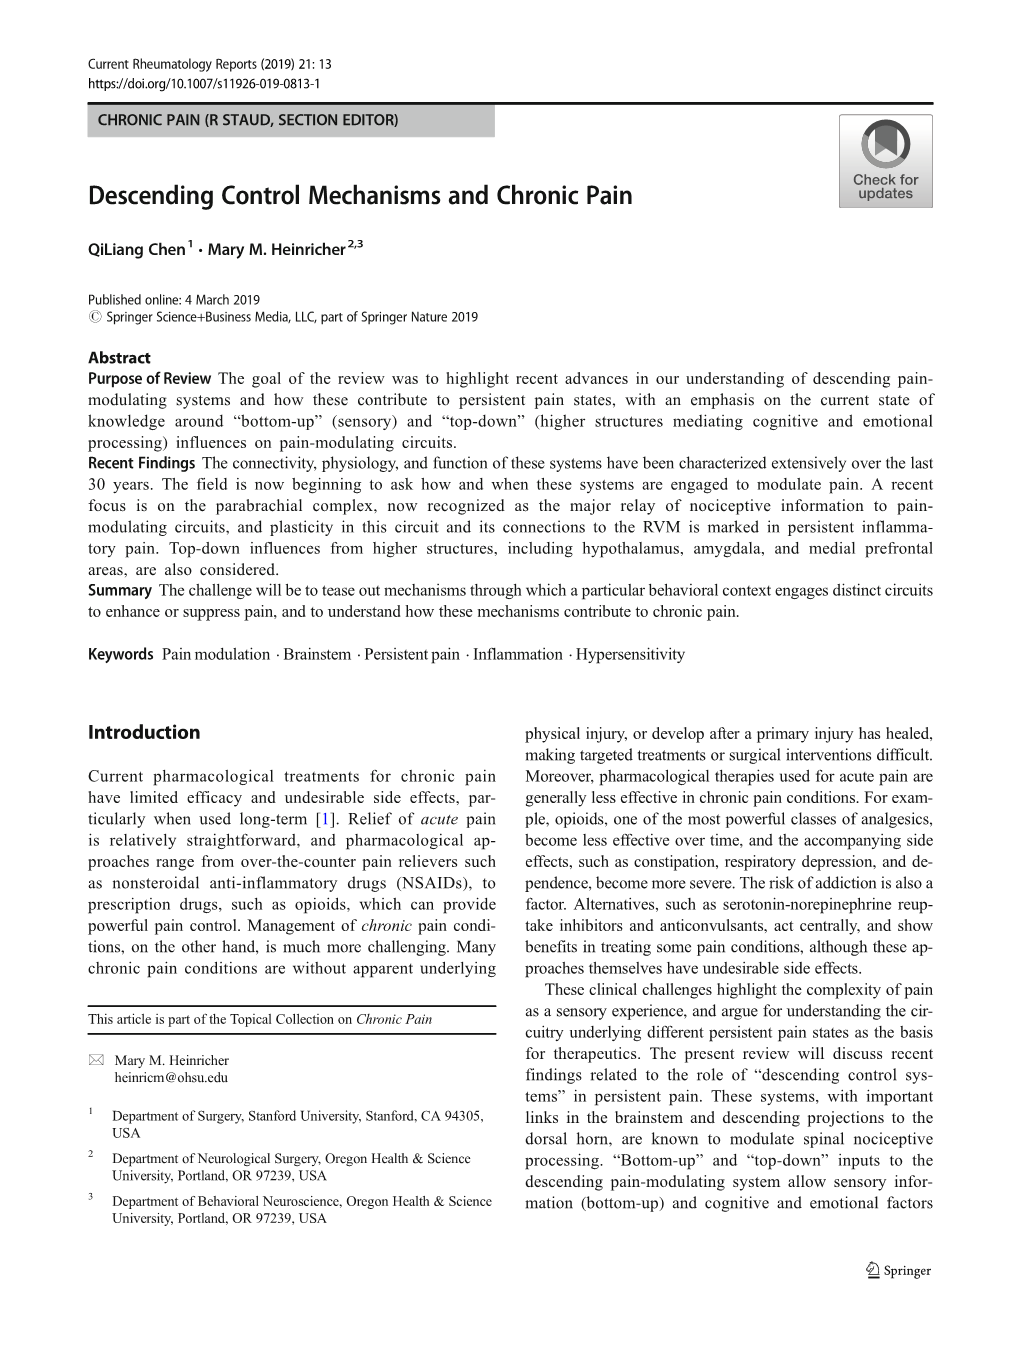 Descending Control Mechanisms and Chronic Pain